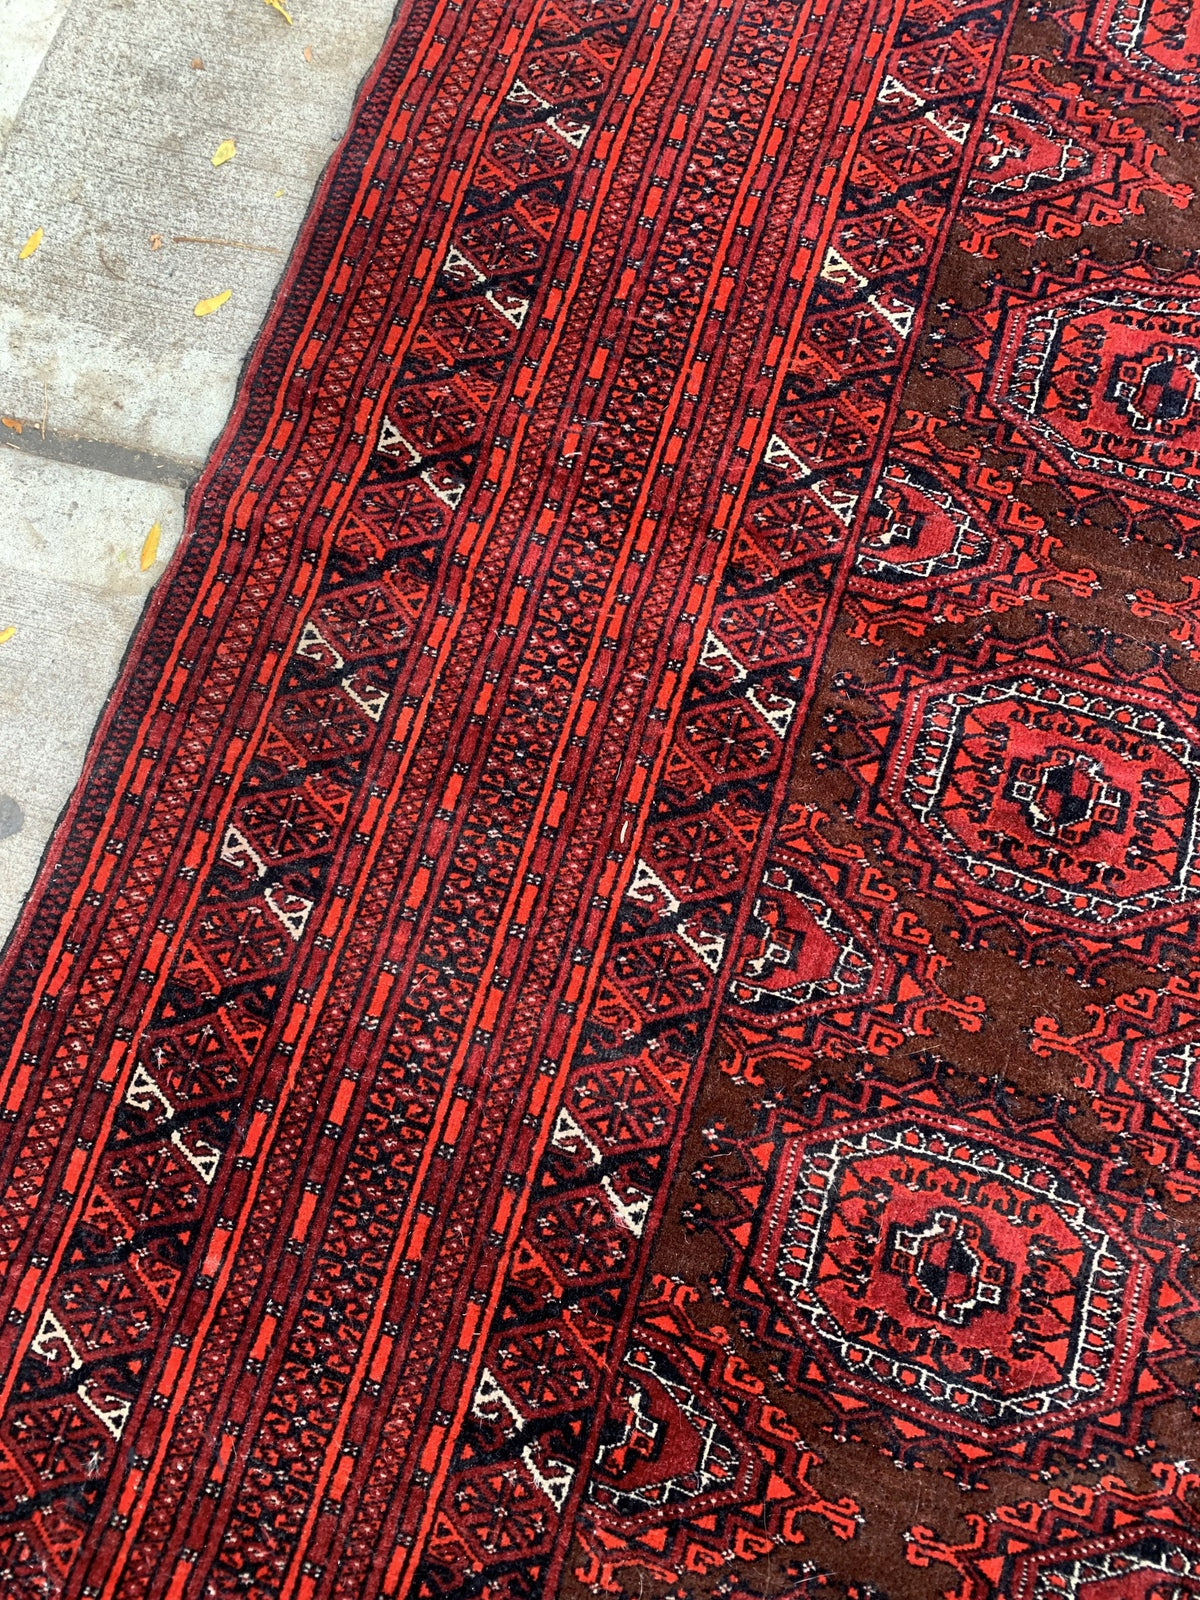 Intricate Bukhara Rug Pattern